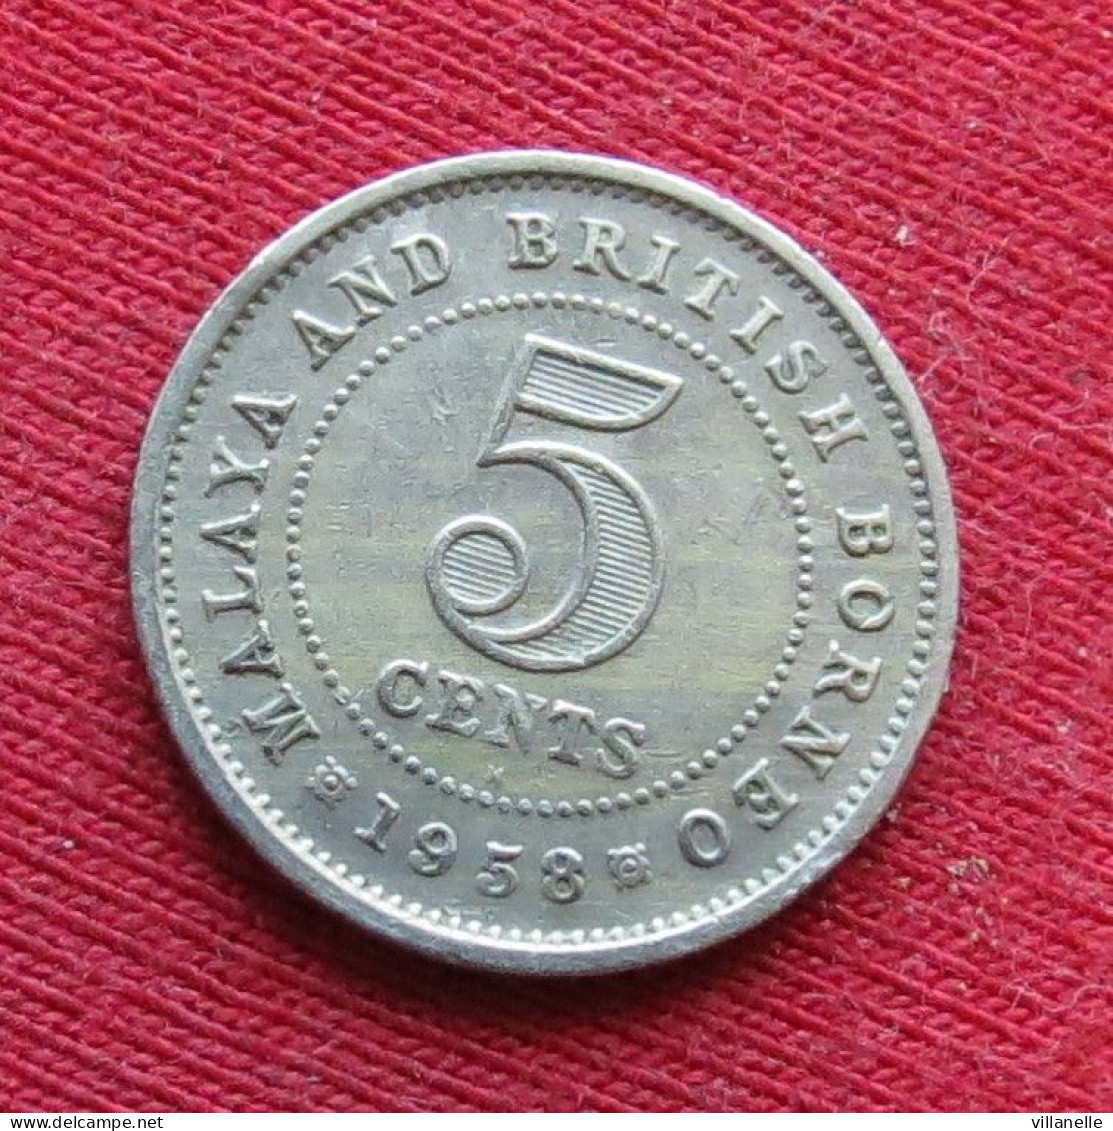 Malaya And British Borneo 5 Cents 1958 H W ºº - Malaysie